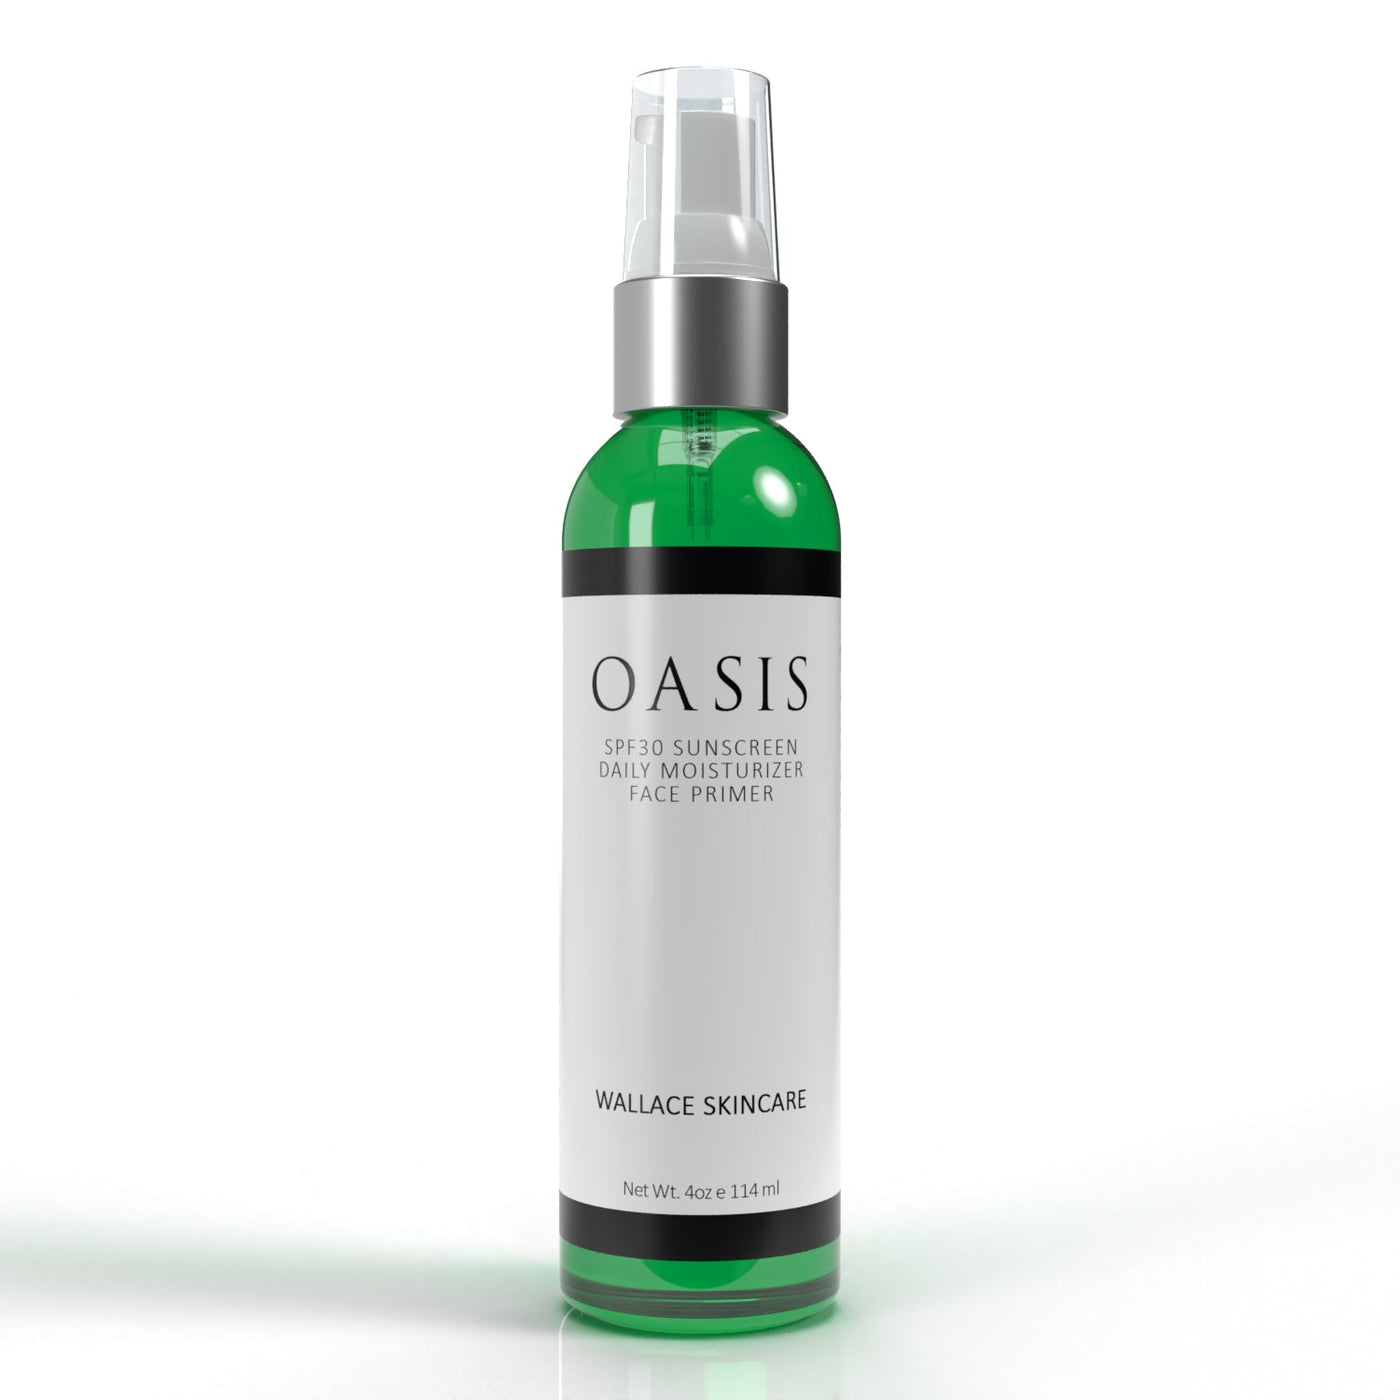 Oasis SPF30 Sunscreen, Vitamin Moisturizer & Face Primer 4oz by Wallace Skincare